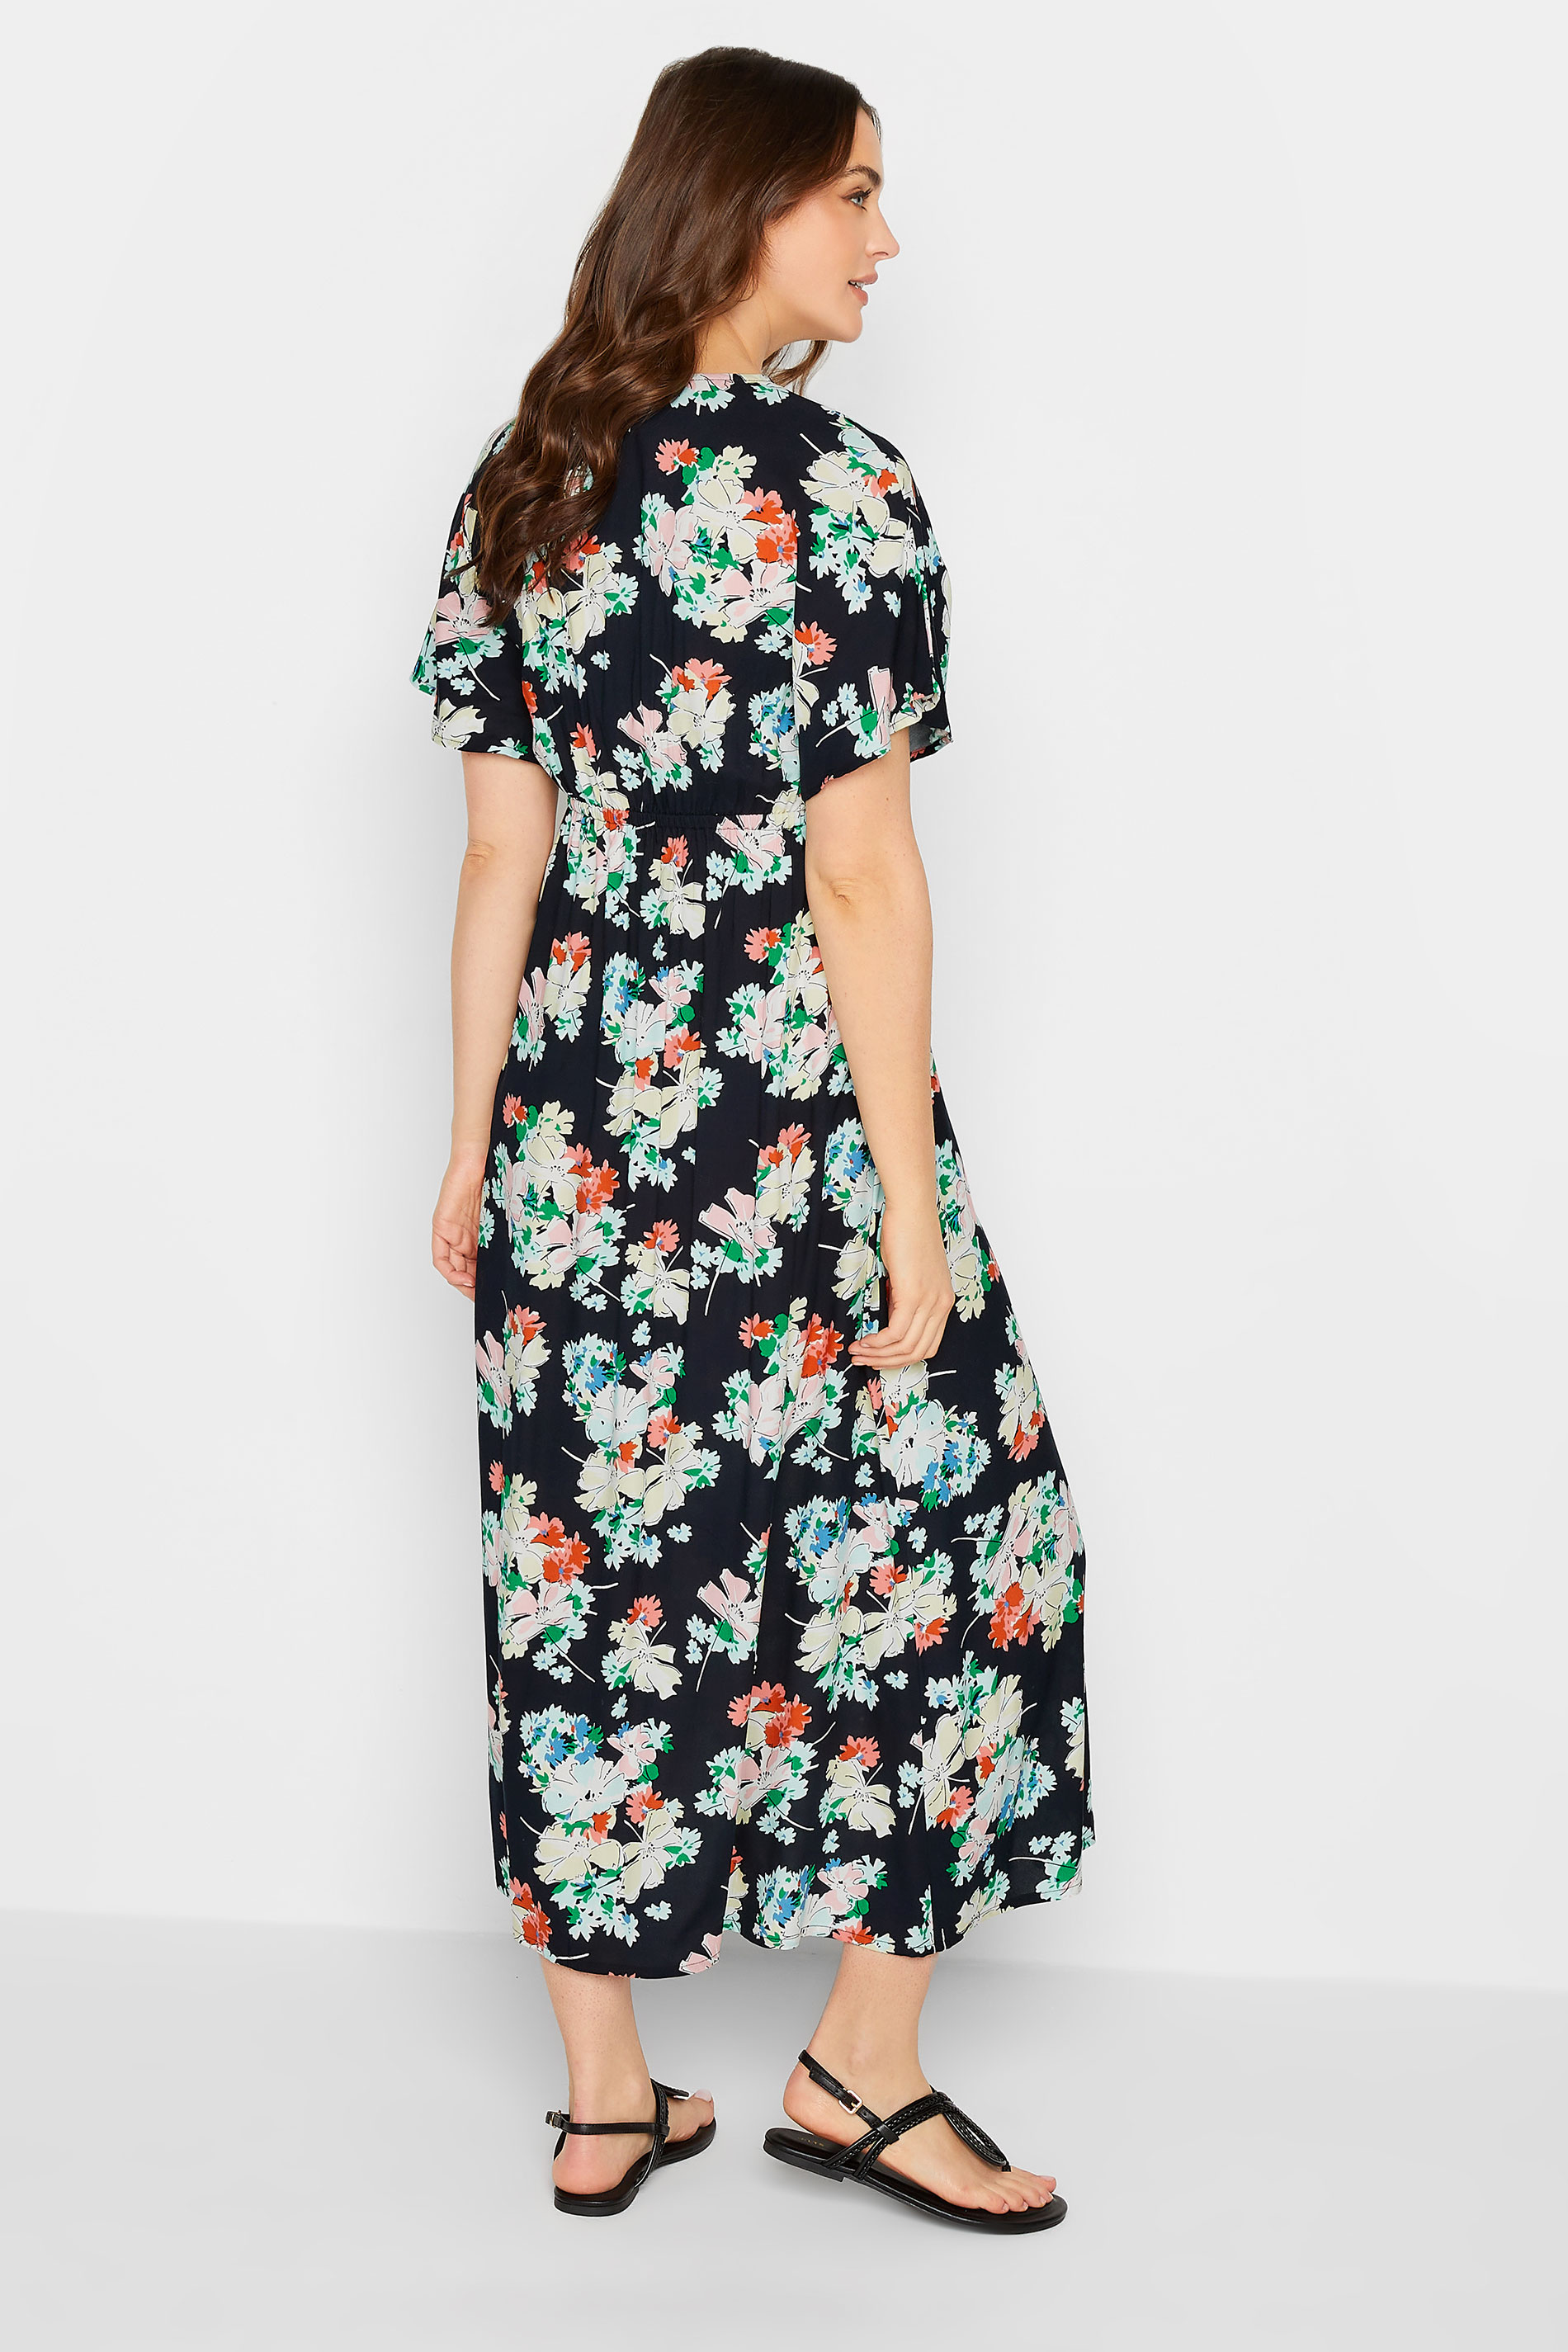 LTS Tall Women's Black Floral Print Split Front Midaxi Dress | Long Tall Sally 3